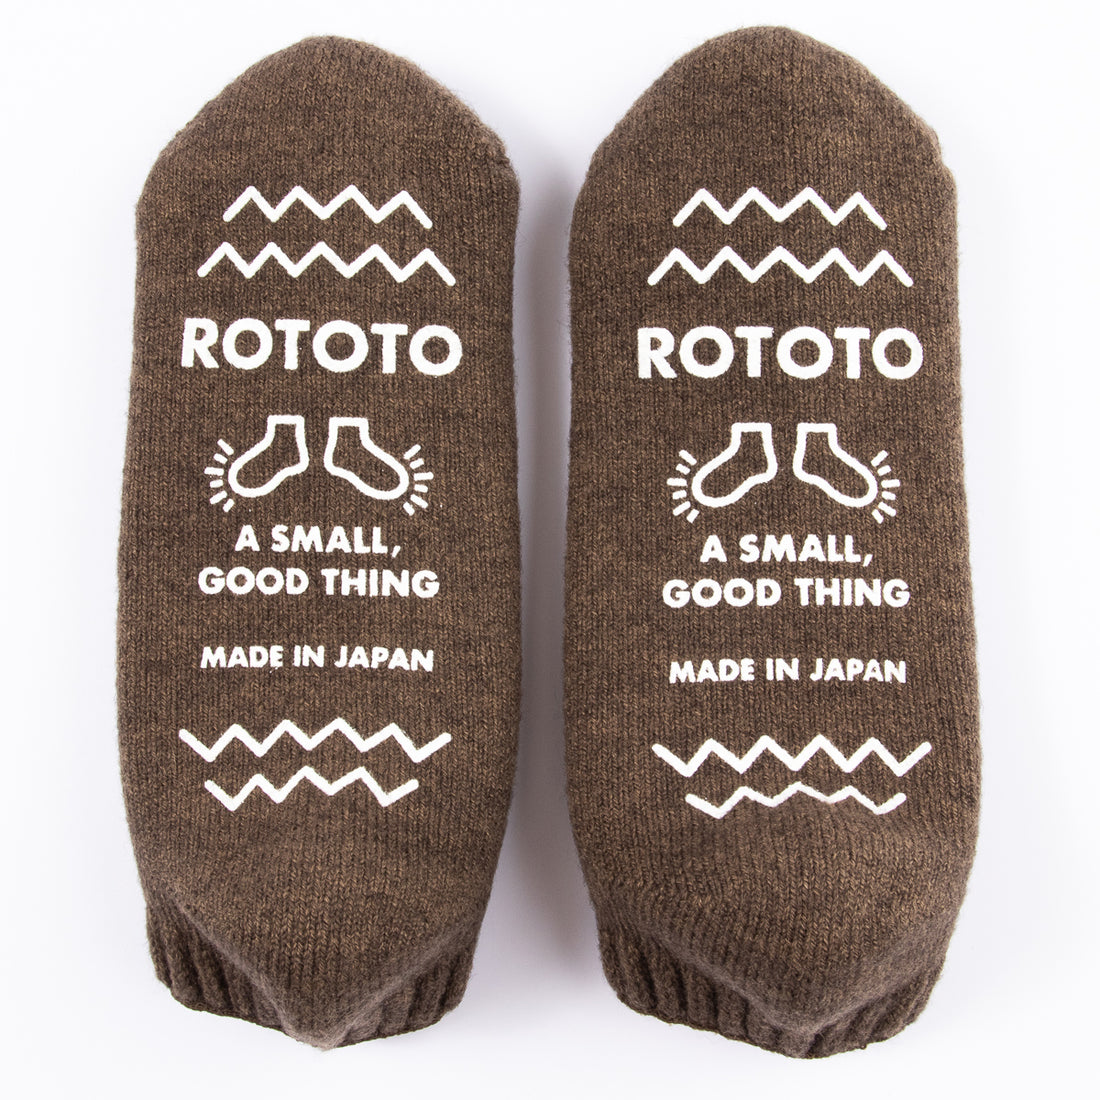 RoToTo Pile Socks Slipper - Mixed Brown - Standard & Strange